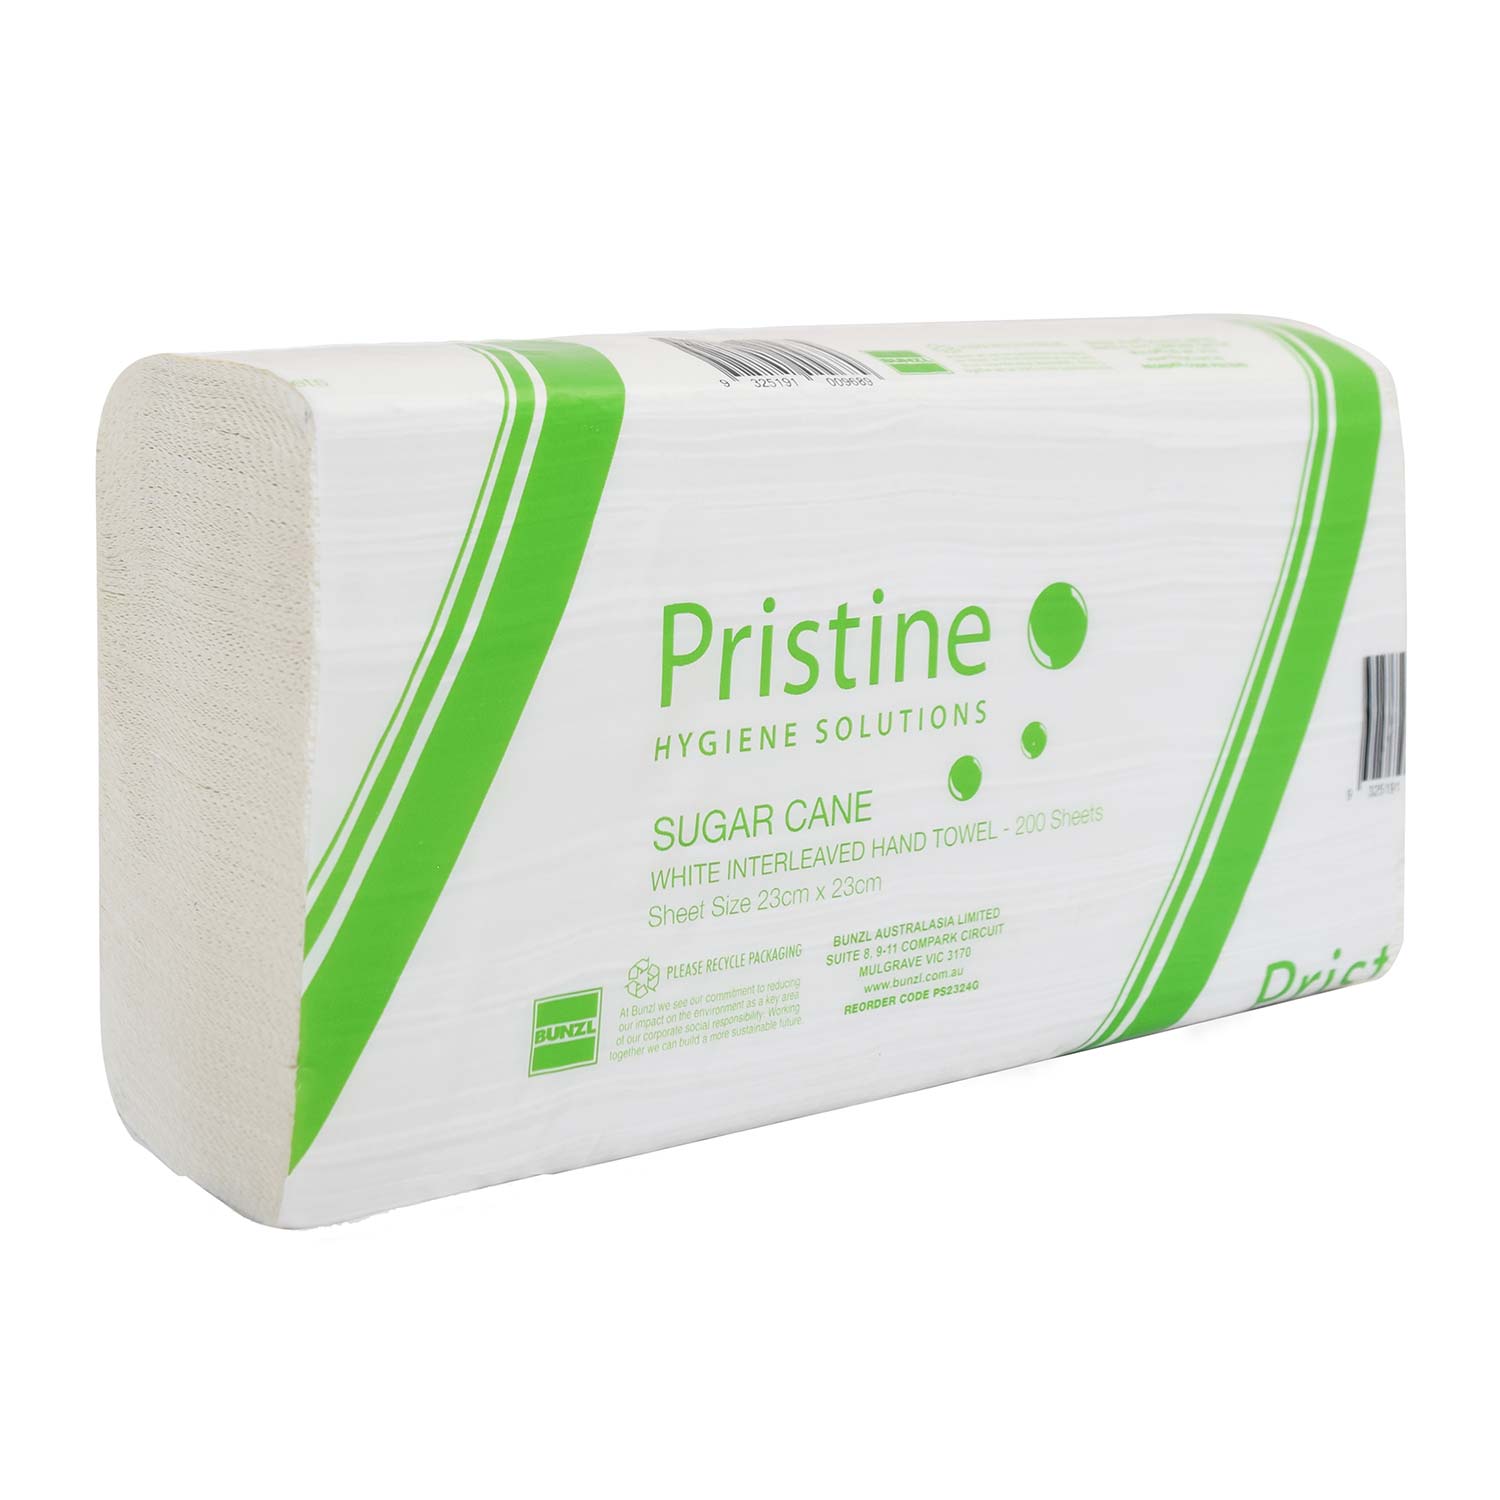 Pristine Sugarcane Slimfold Towel 200sht - CT/16 Bathroom Supplies  